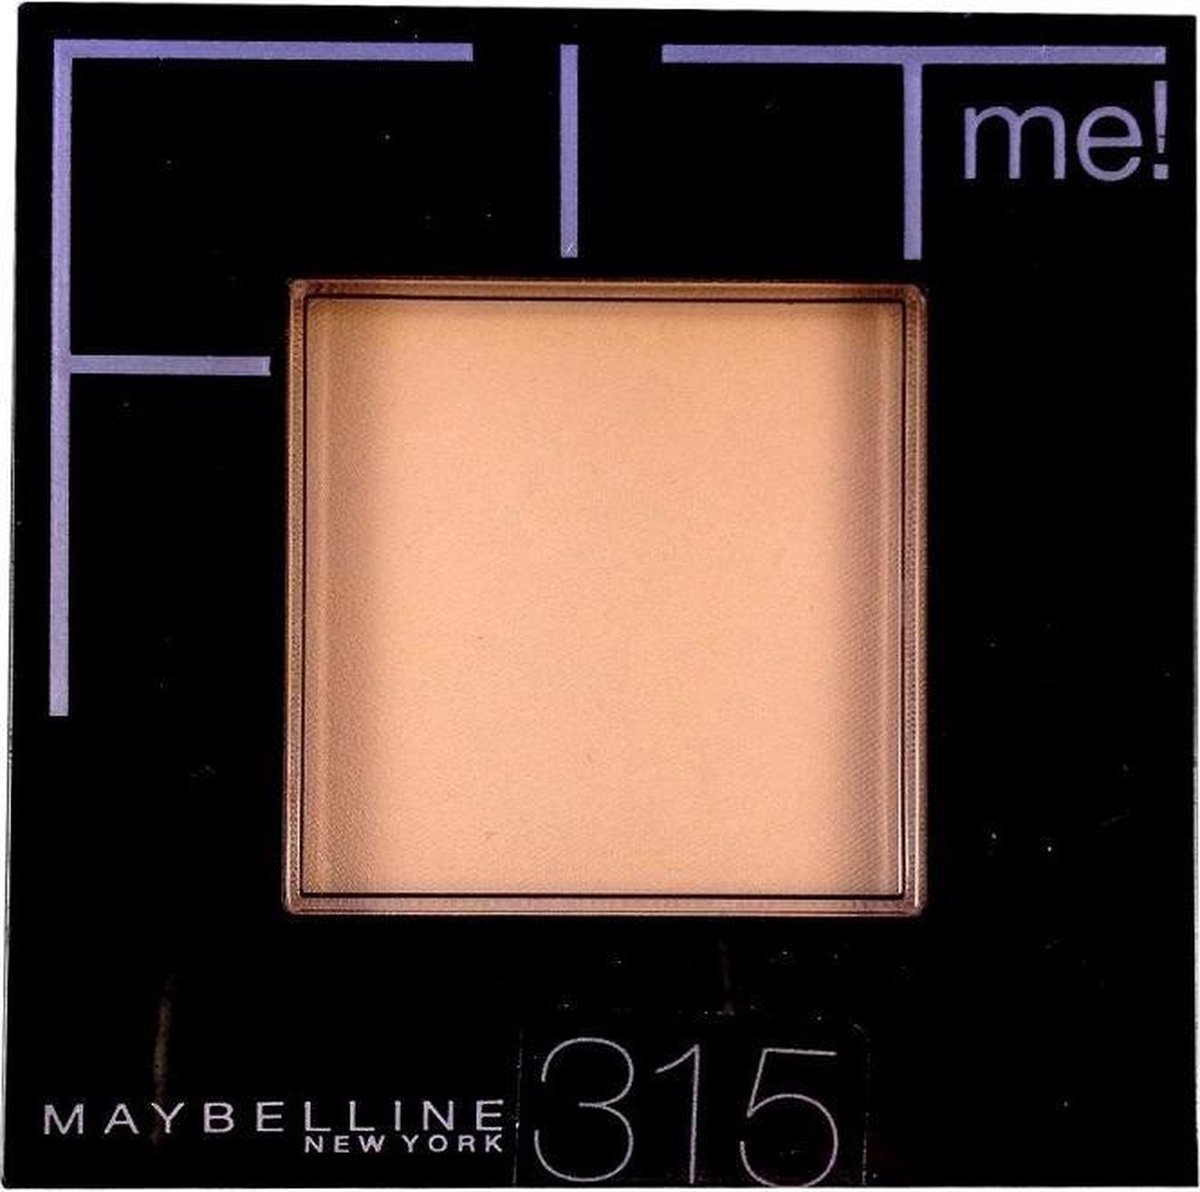 Maybelline Fit Me Pressed Powder - 315 Soft Honey - Maybelline